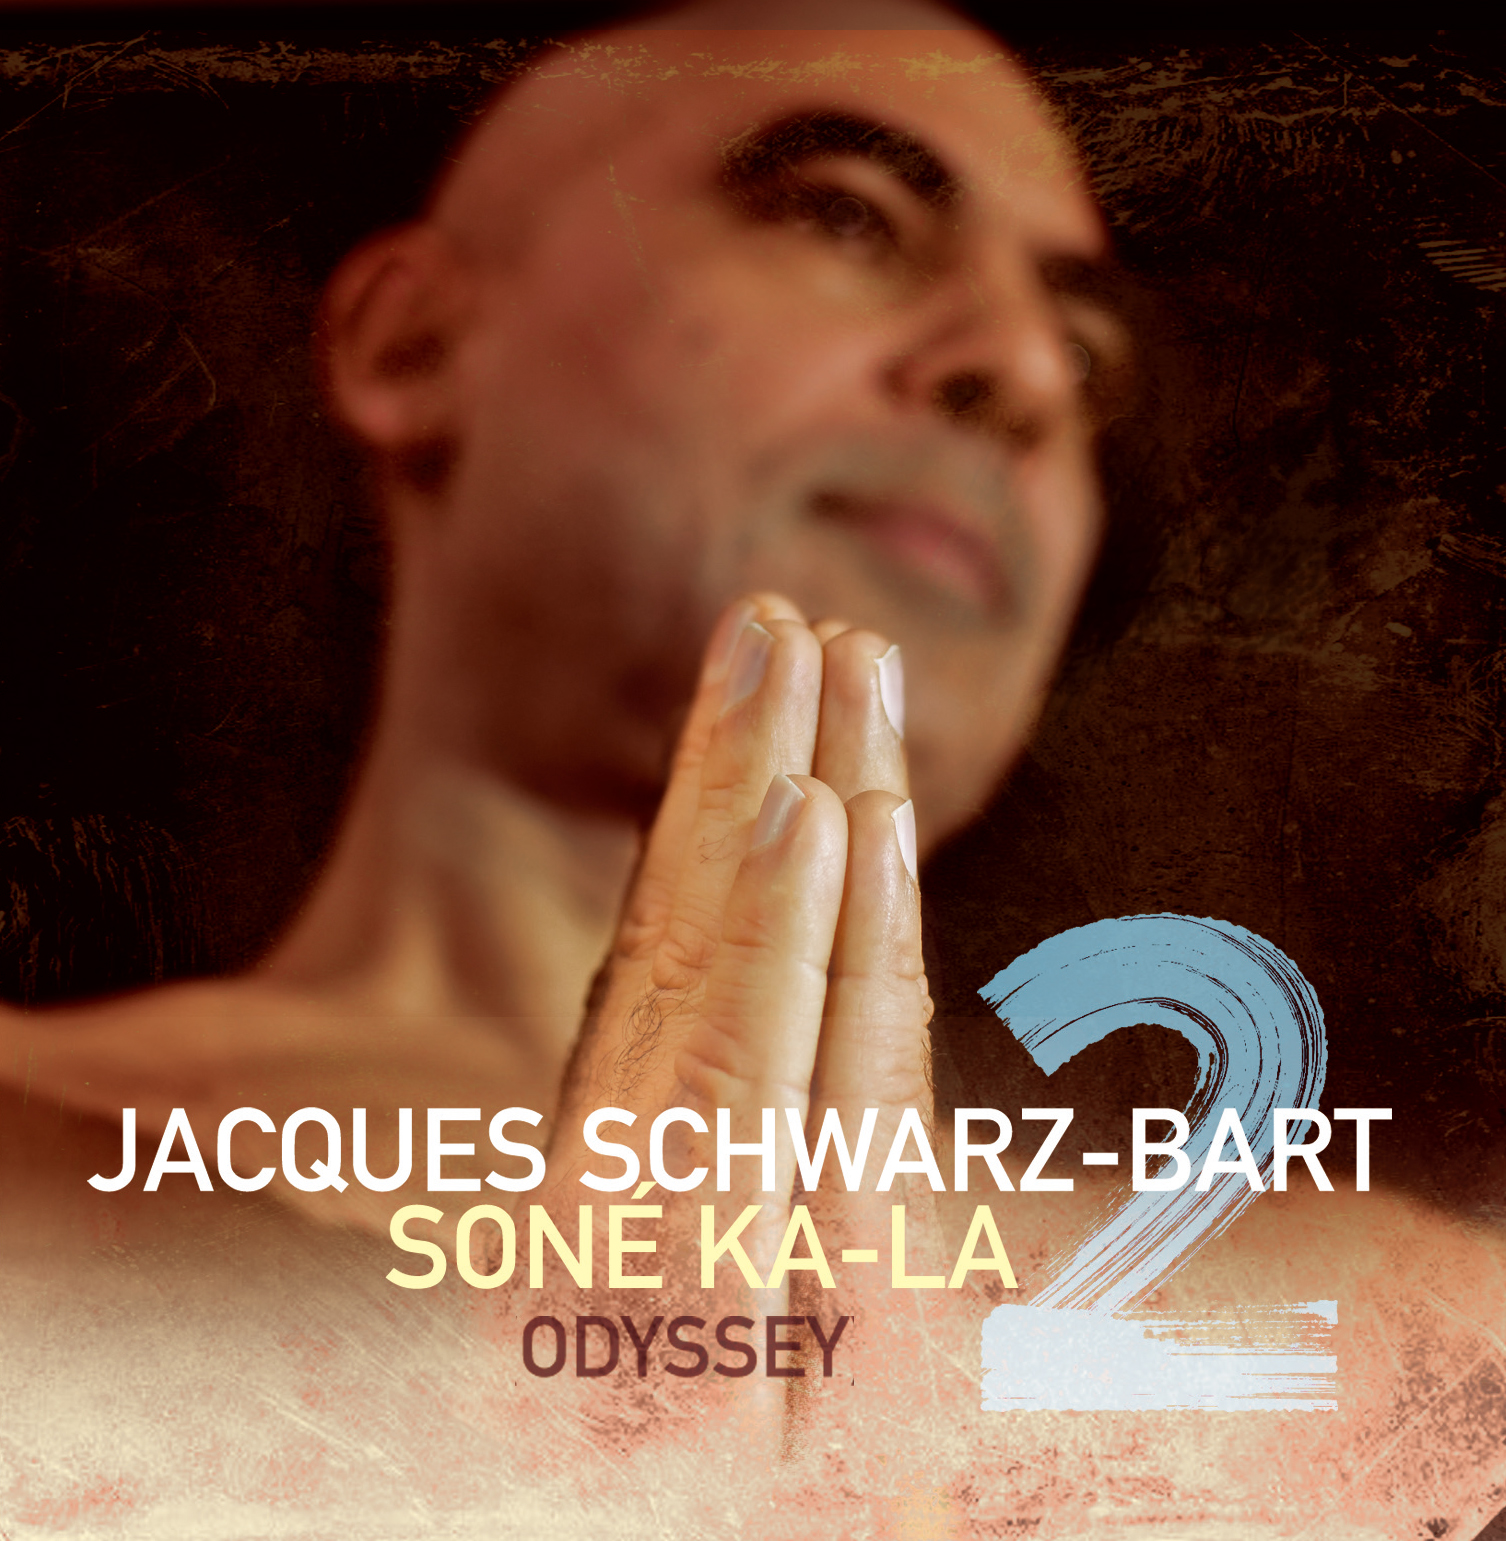 Jacques Schwarz-Bart + Edmony Krater